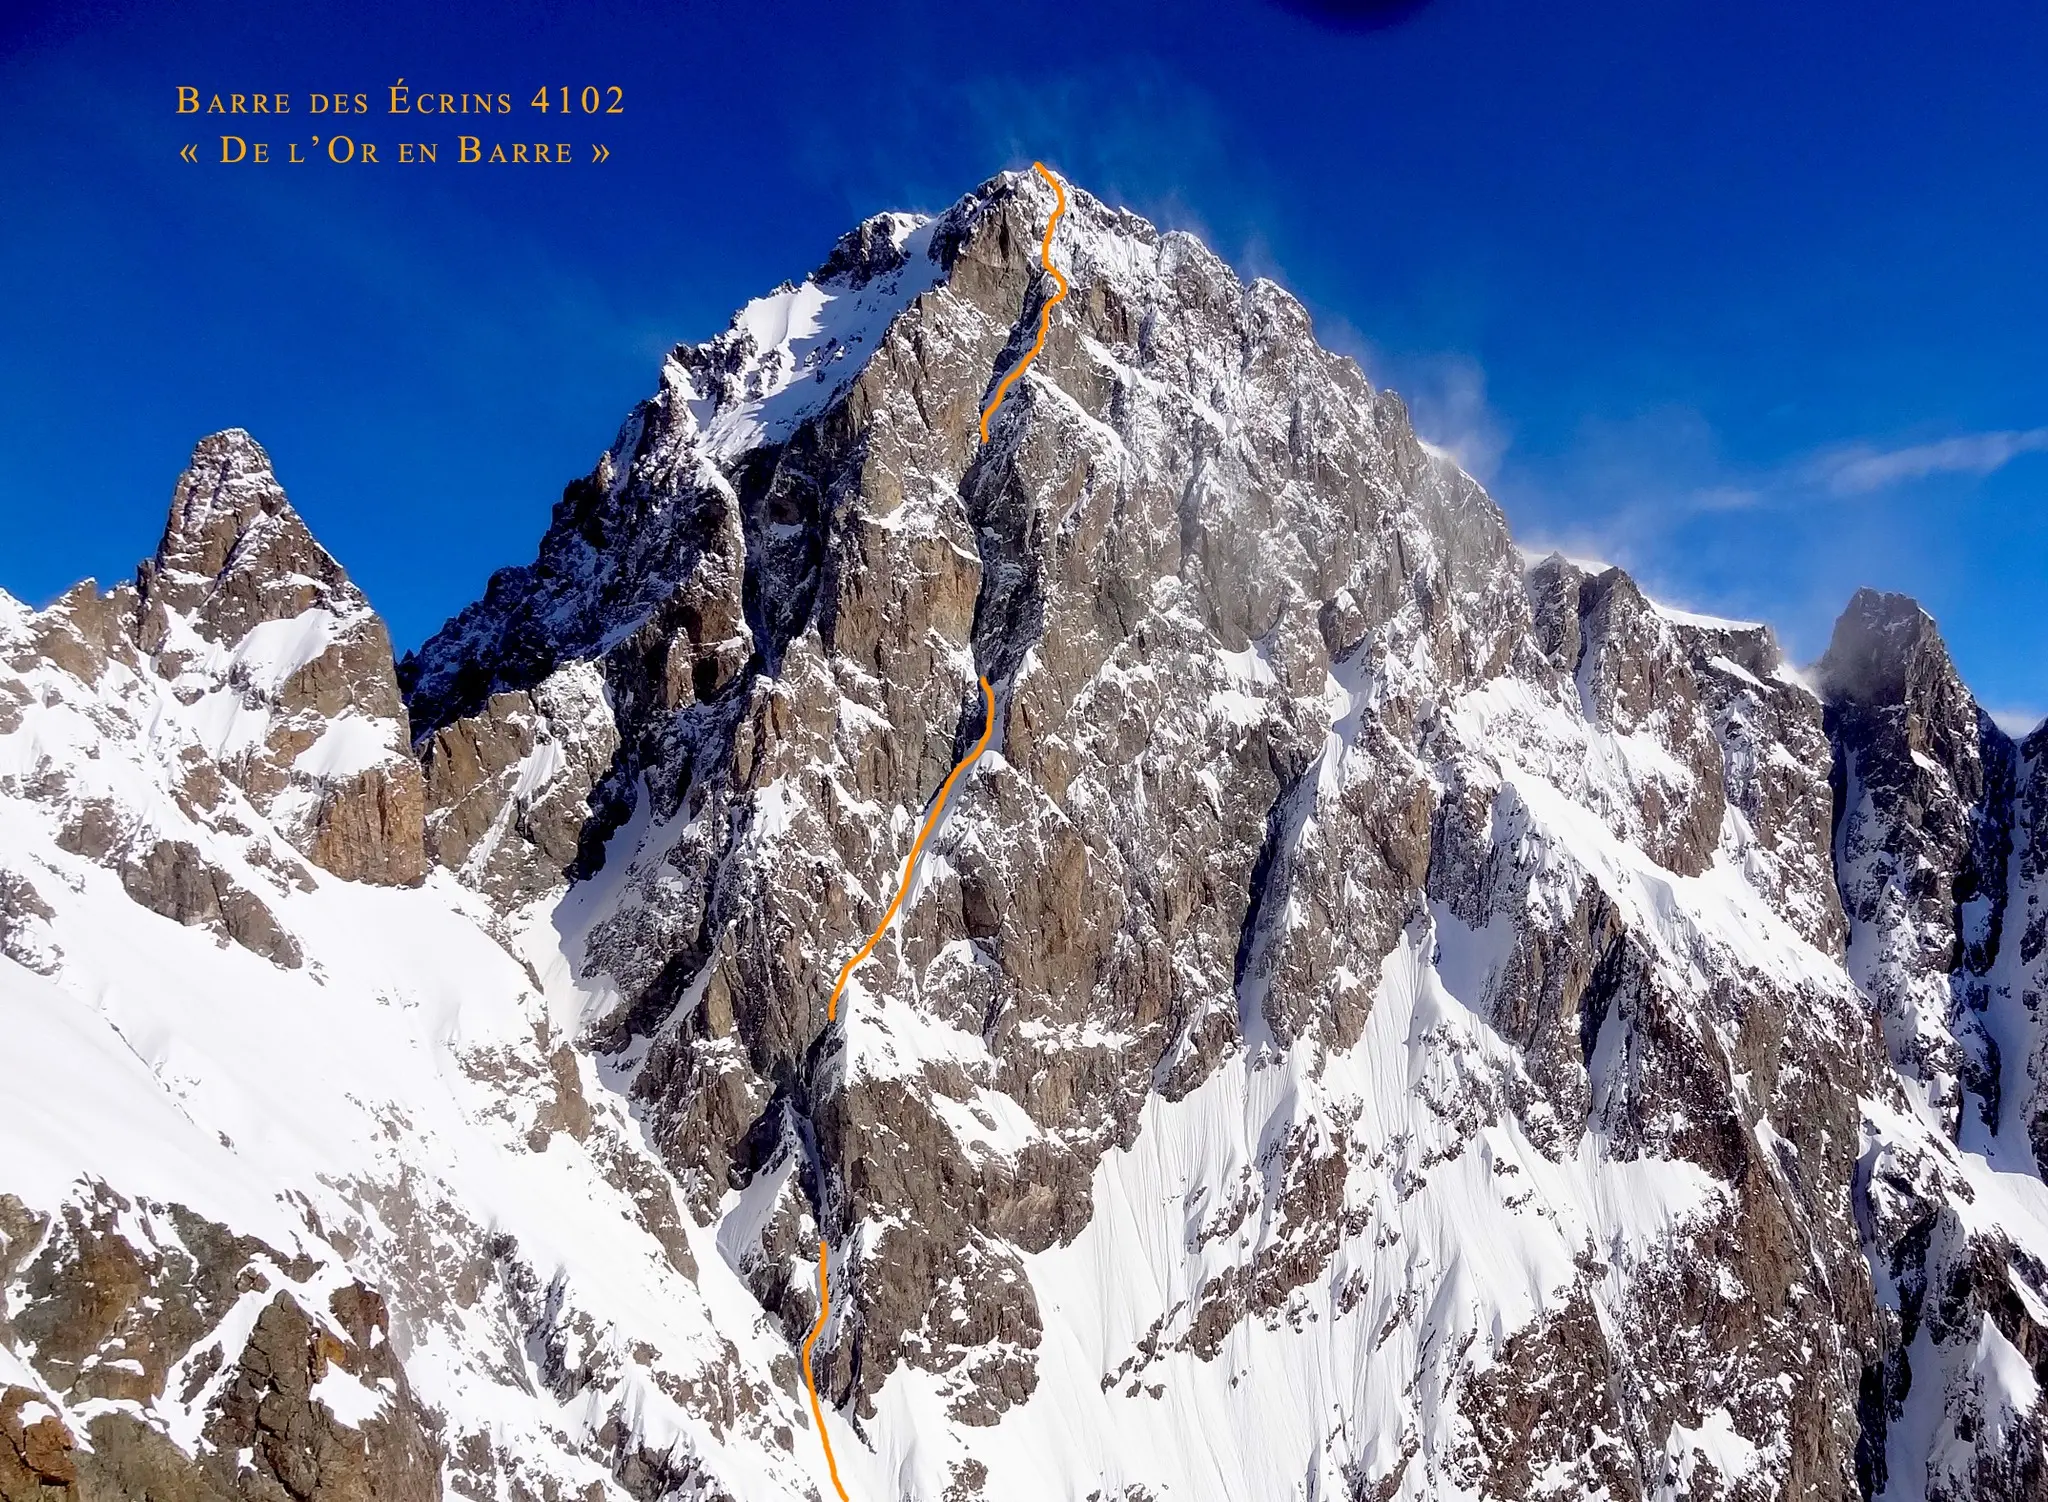 Маршрут "De L’Or en Barre" M7, 5+, ED+, 1000 метрів на вершину Барр-дез-Екрен (Barre des Écrins) висотою 4102 метрів. Фото Benjamin Védrines